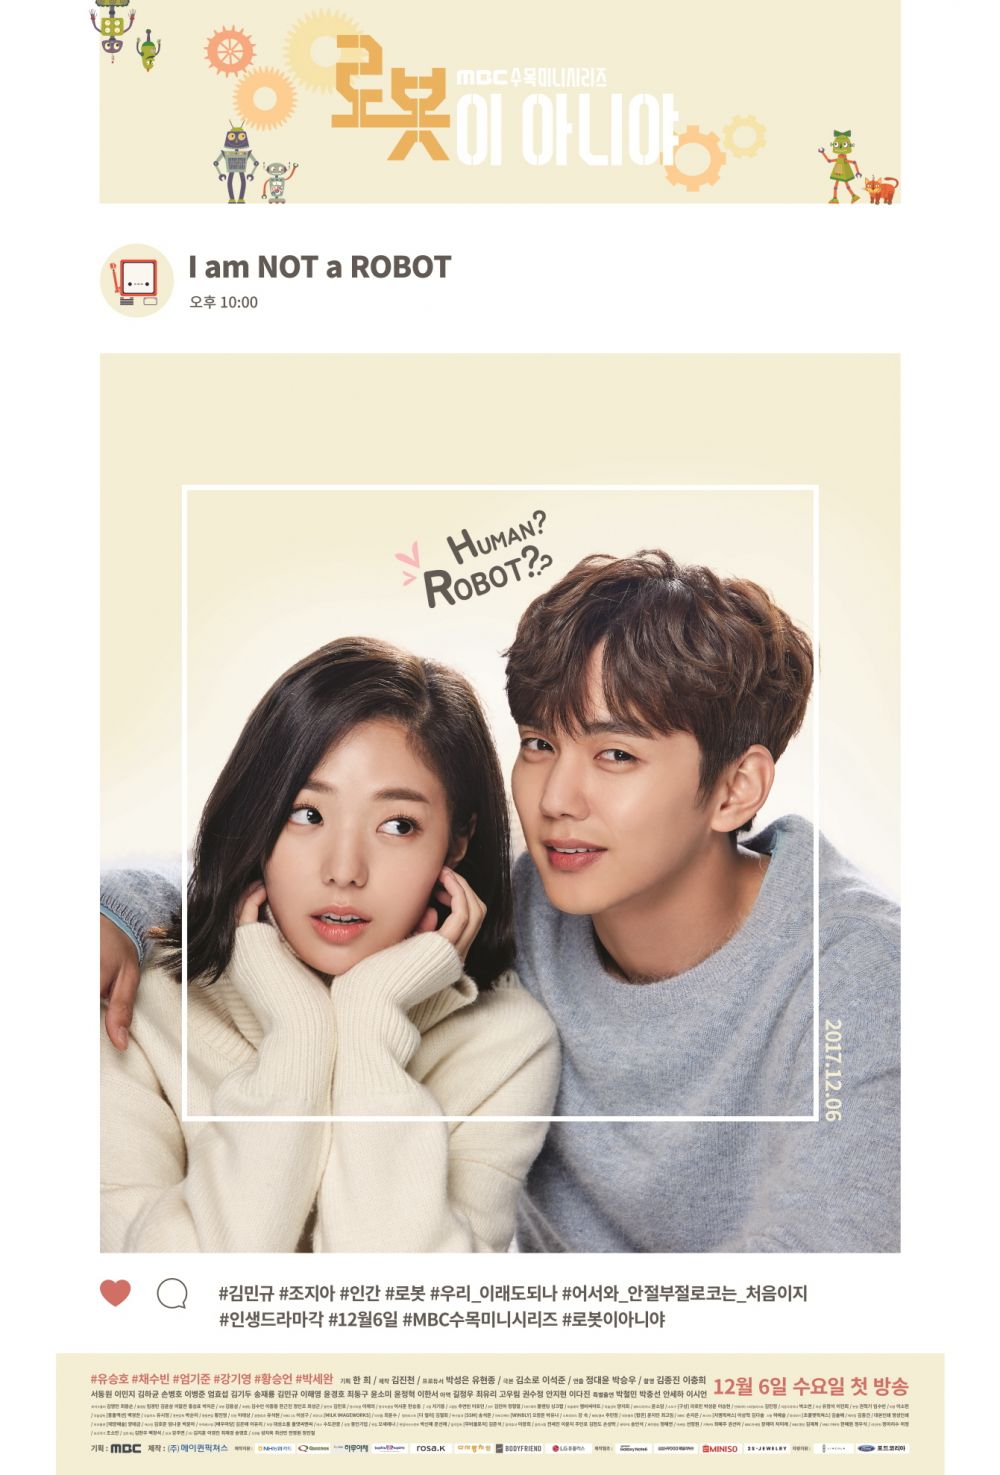 8 Drama Korea romantis tampilkan tokoh robot, bikin jatuh hati